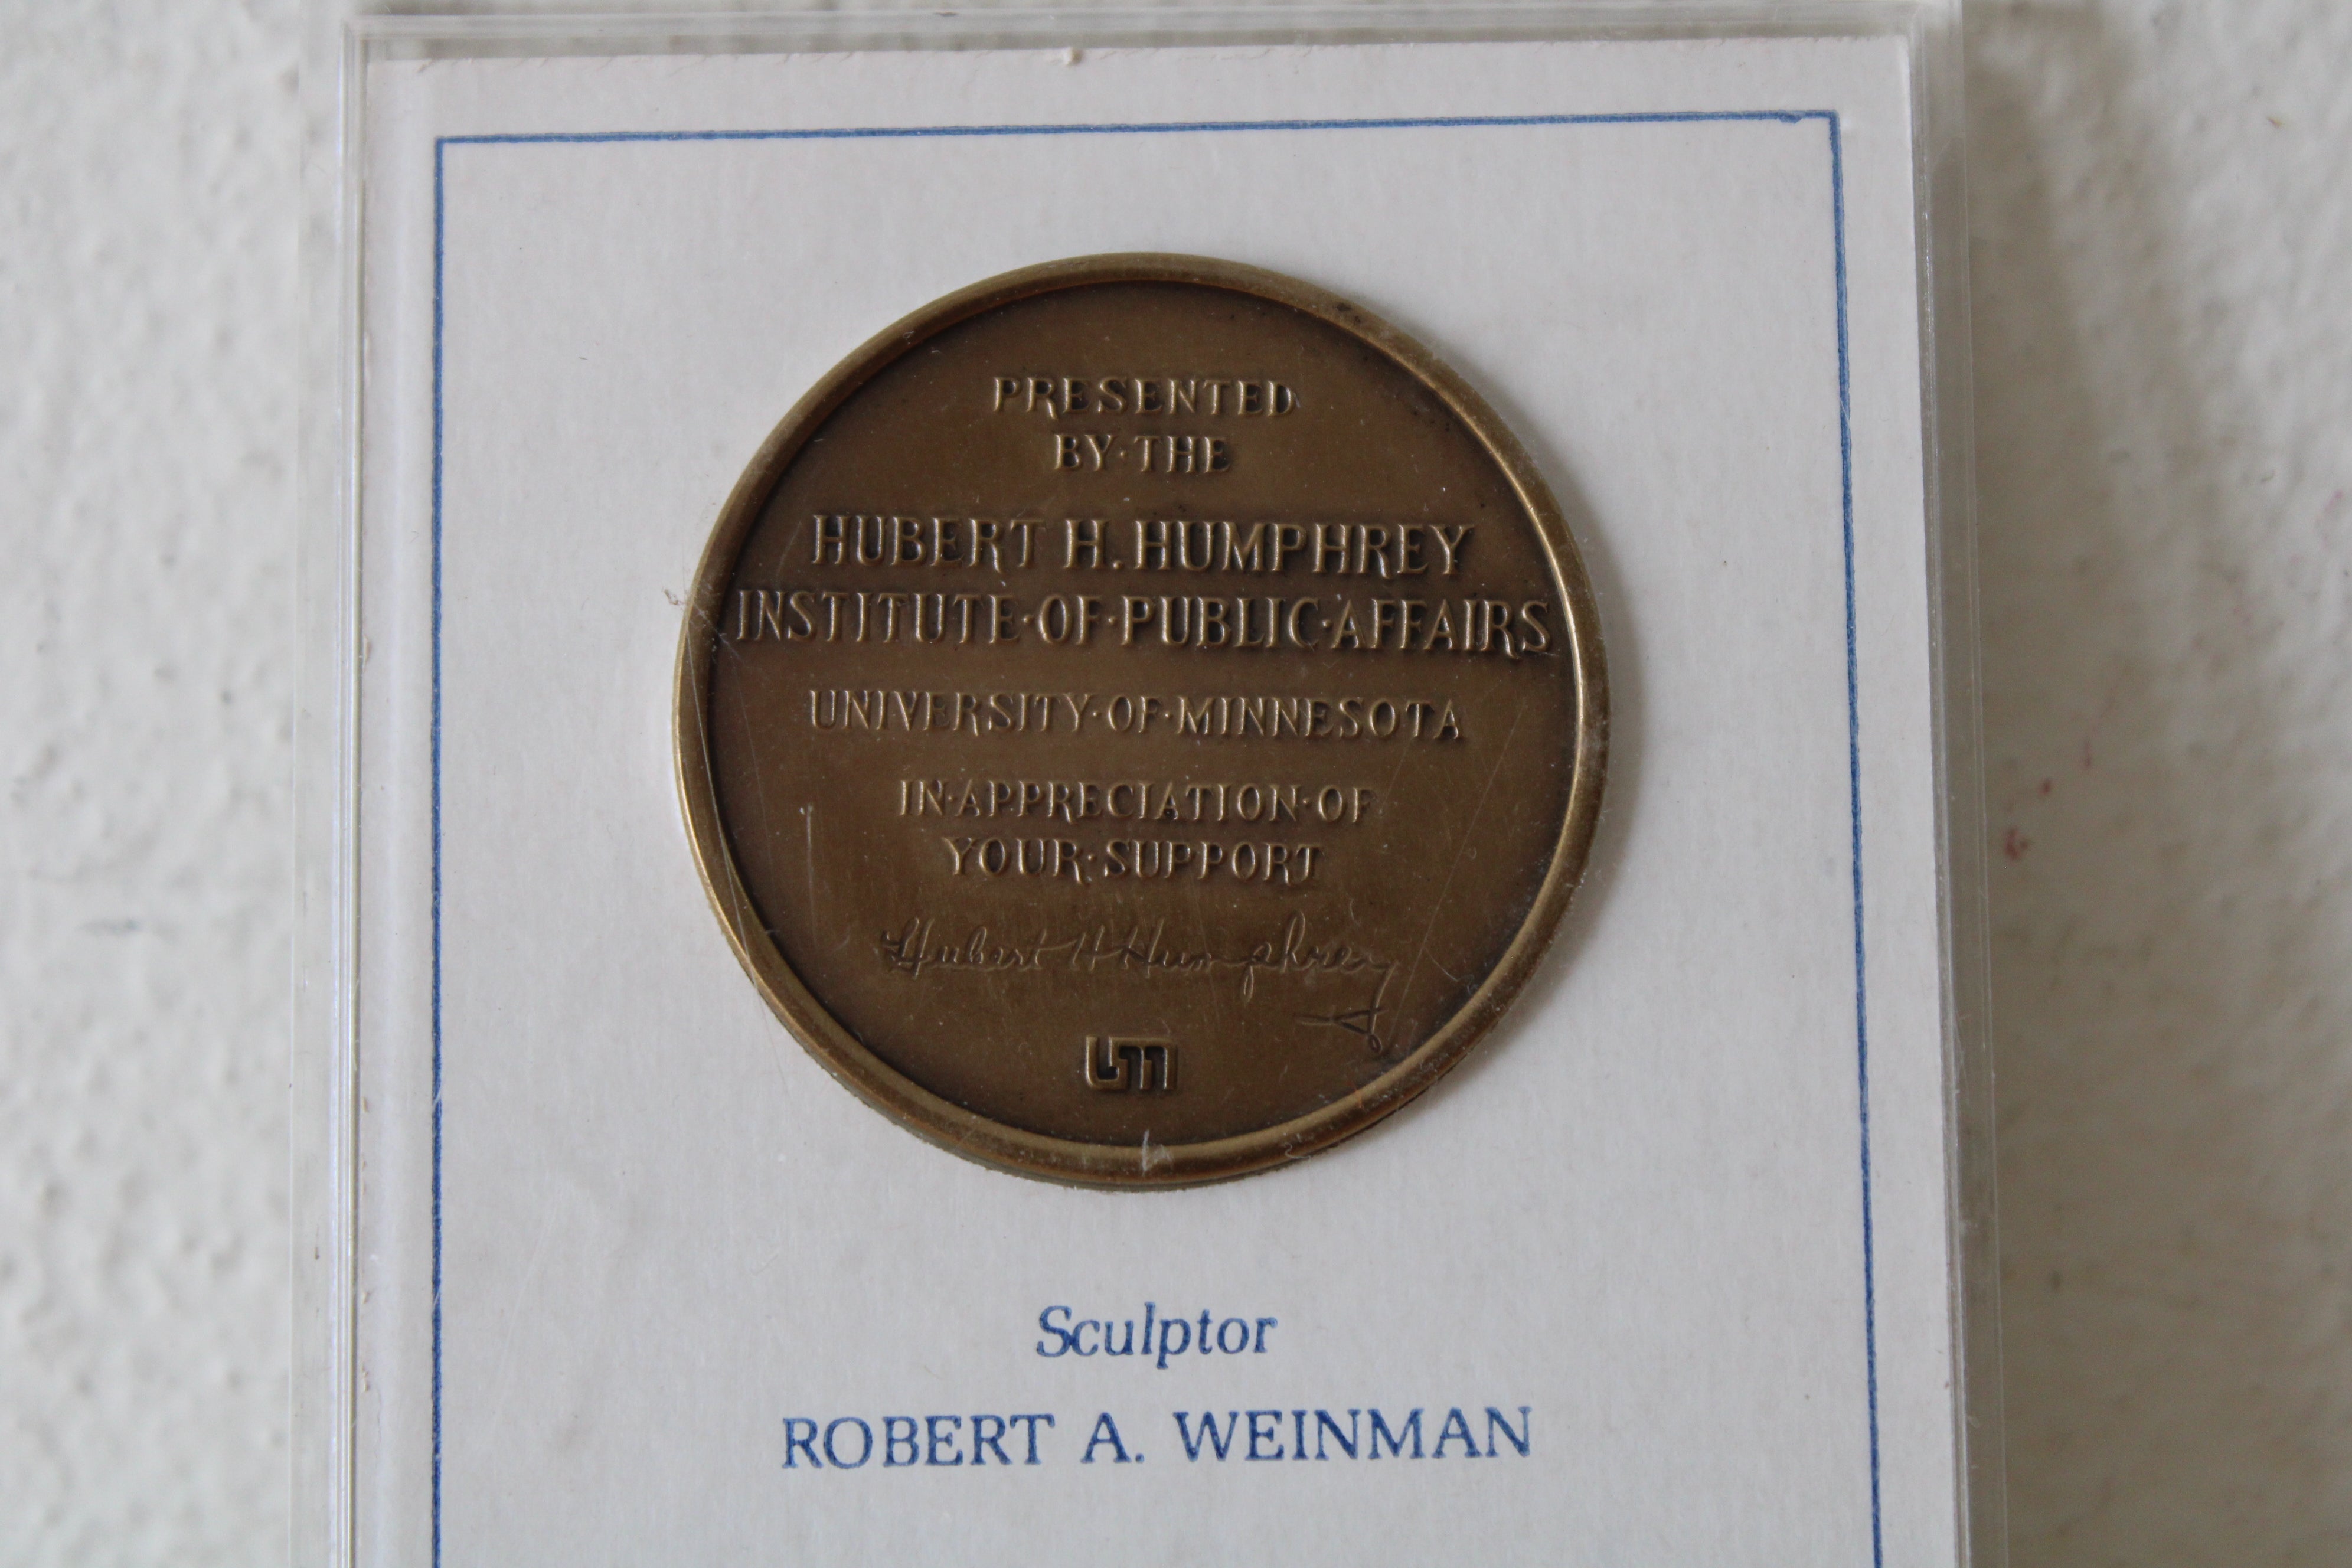 Hubert H. Humphrey Institute Of Public Affairs Coin